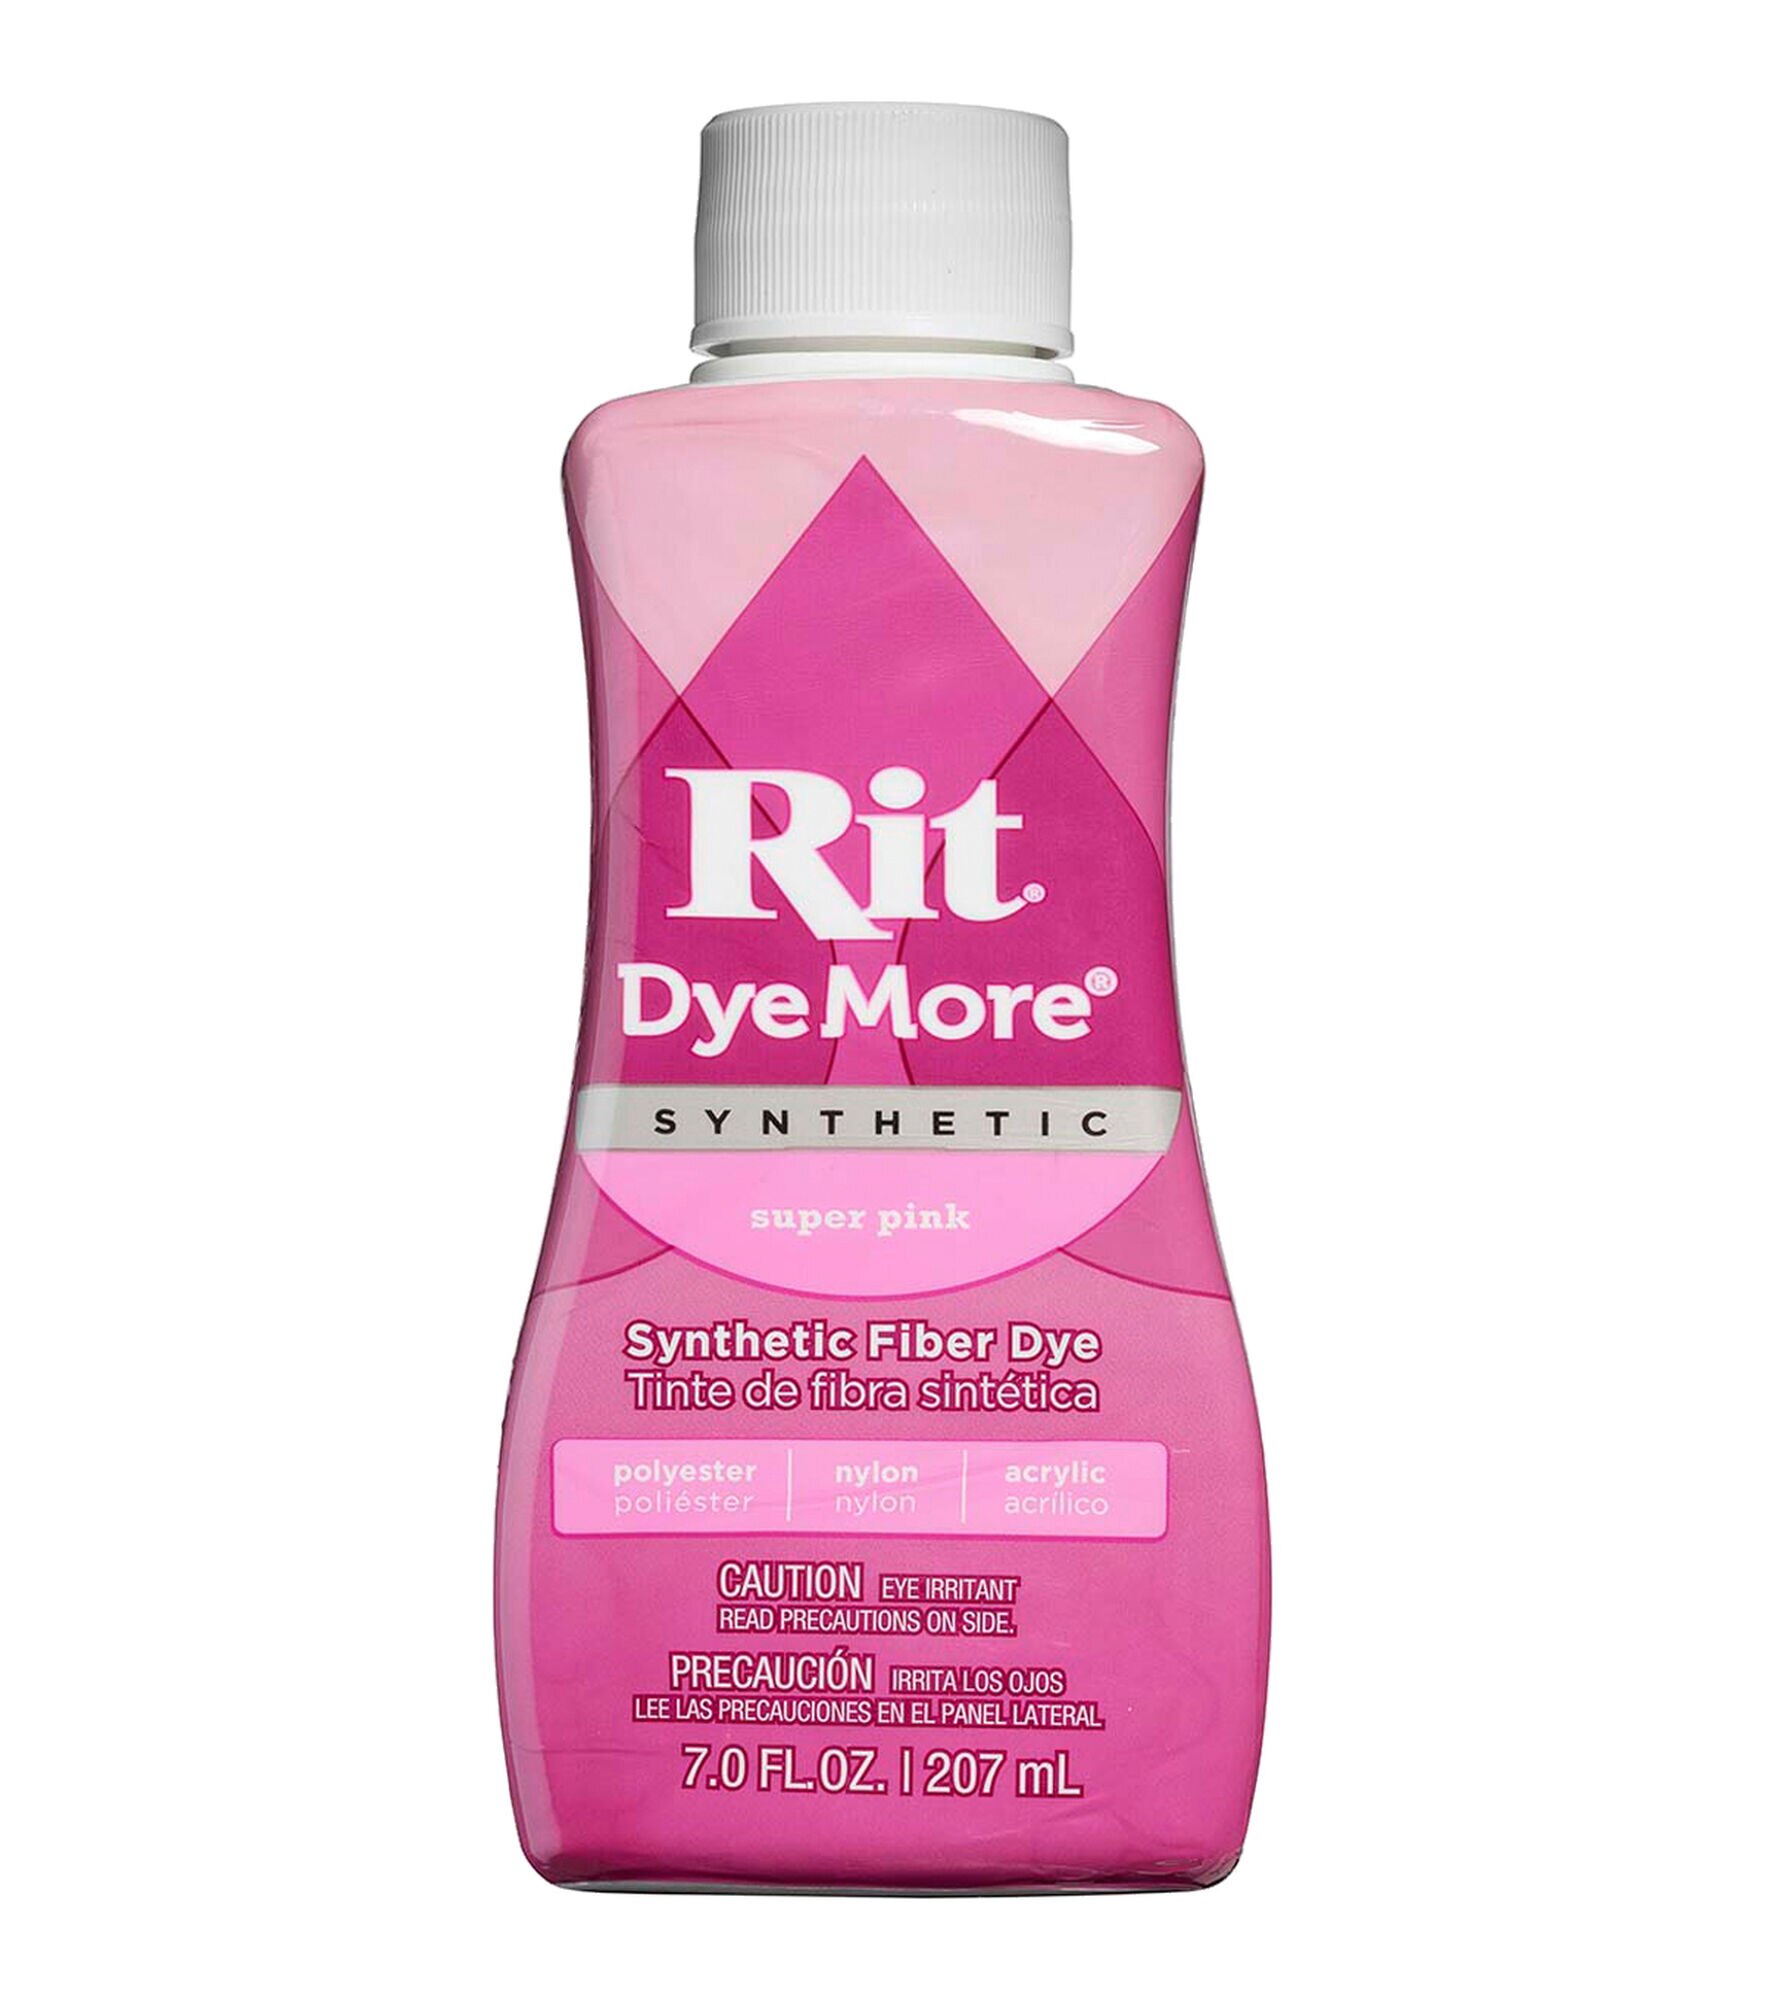 Lot of 3 Rit DyeMore Liquid Fiber Dye - Graphite, Super Pink, Kentucky Sky  NEW